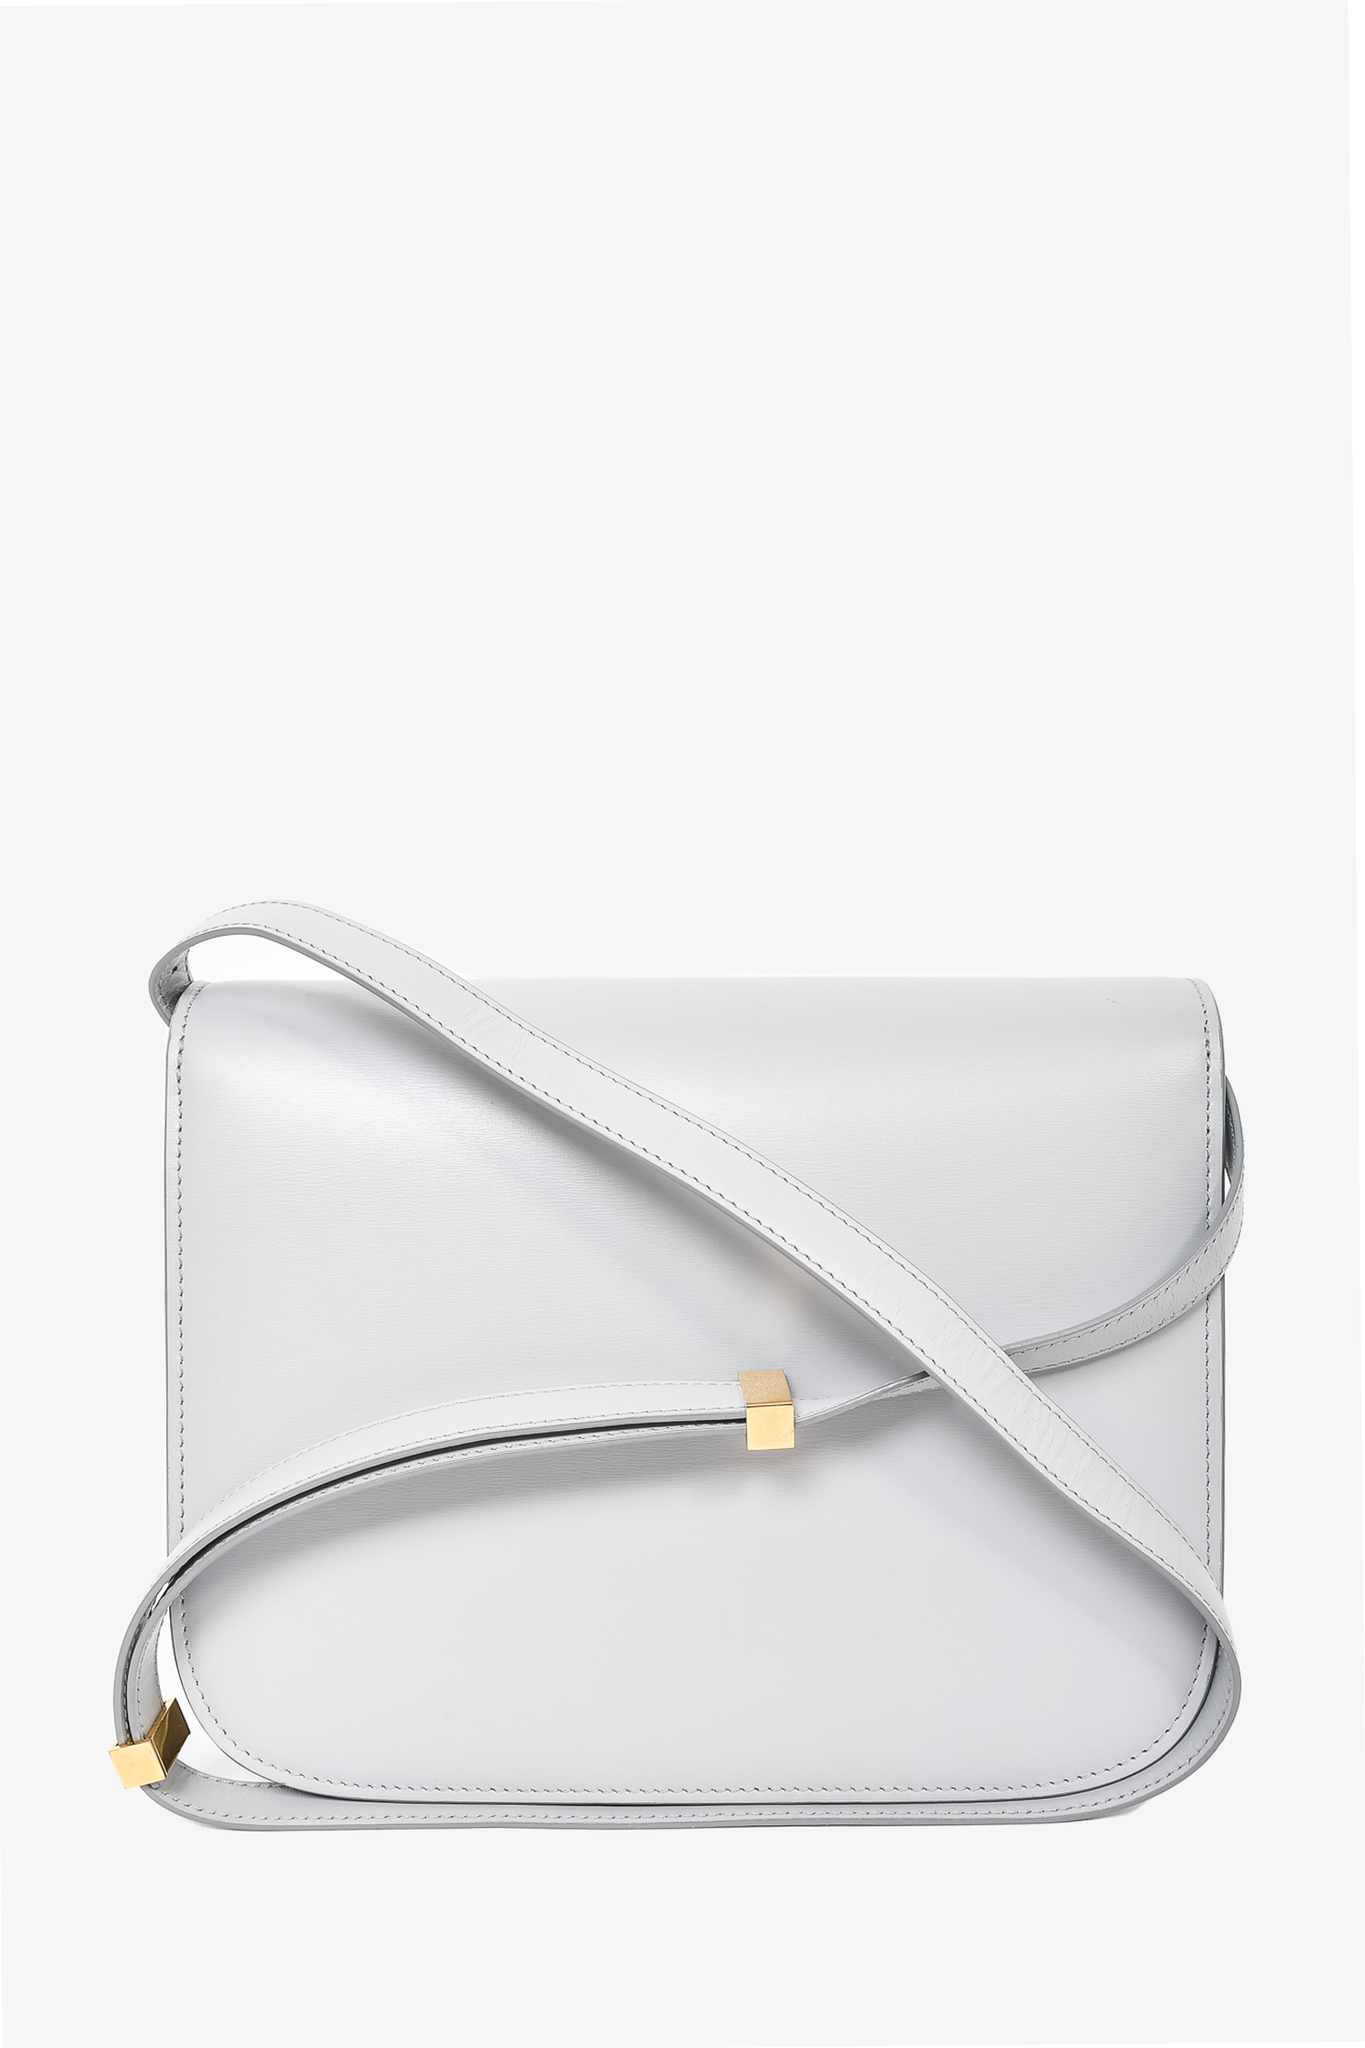 Celine Light Grey Leather Medium Box Crossbody Bag